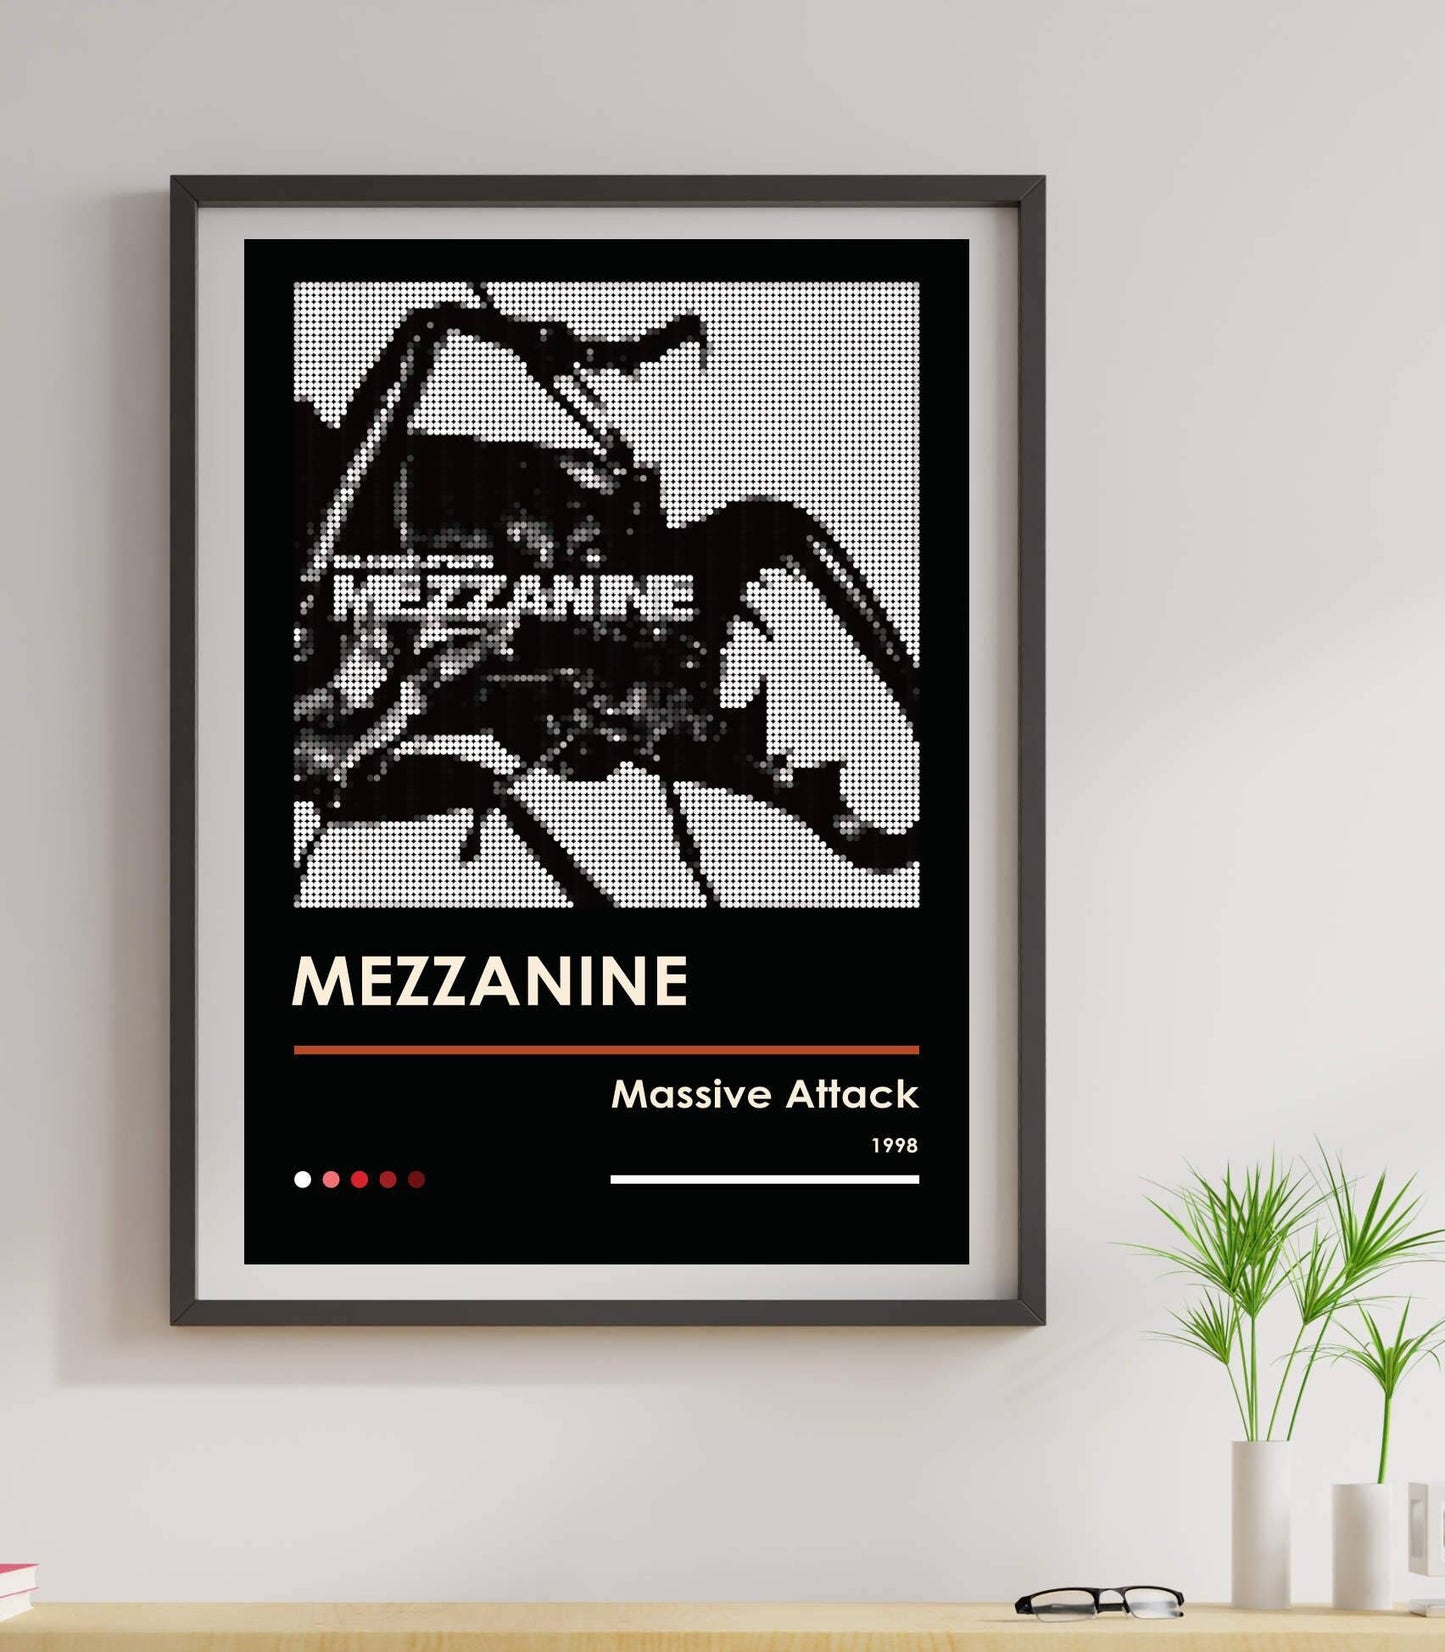 Vintage-Inspired Massive Attack Poster